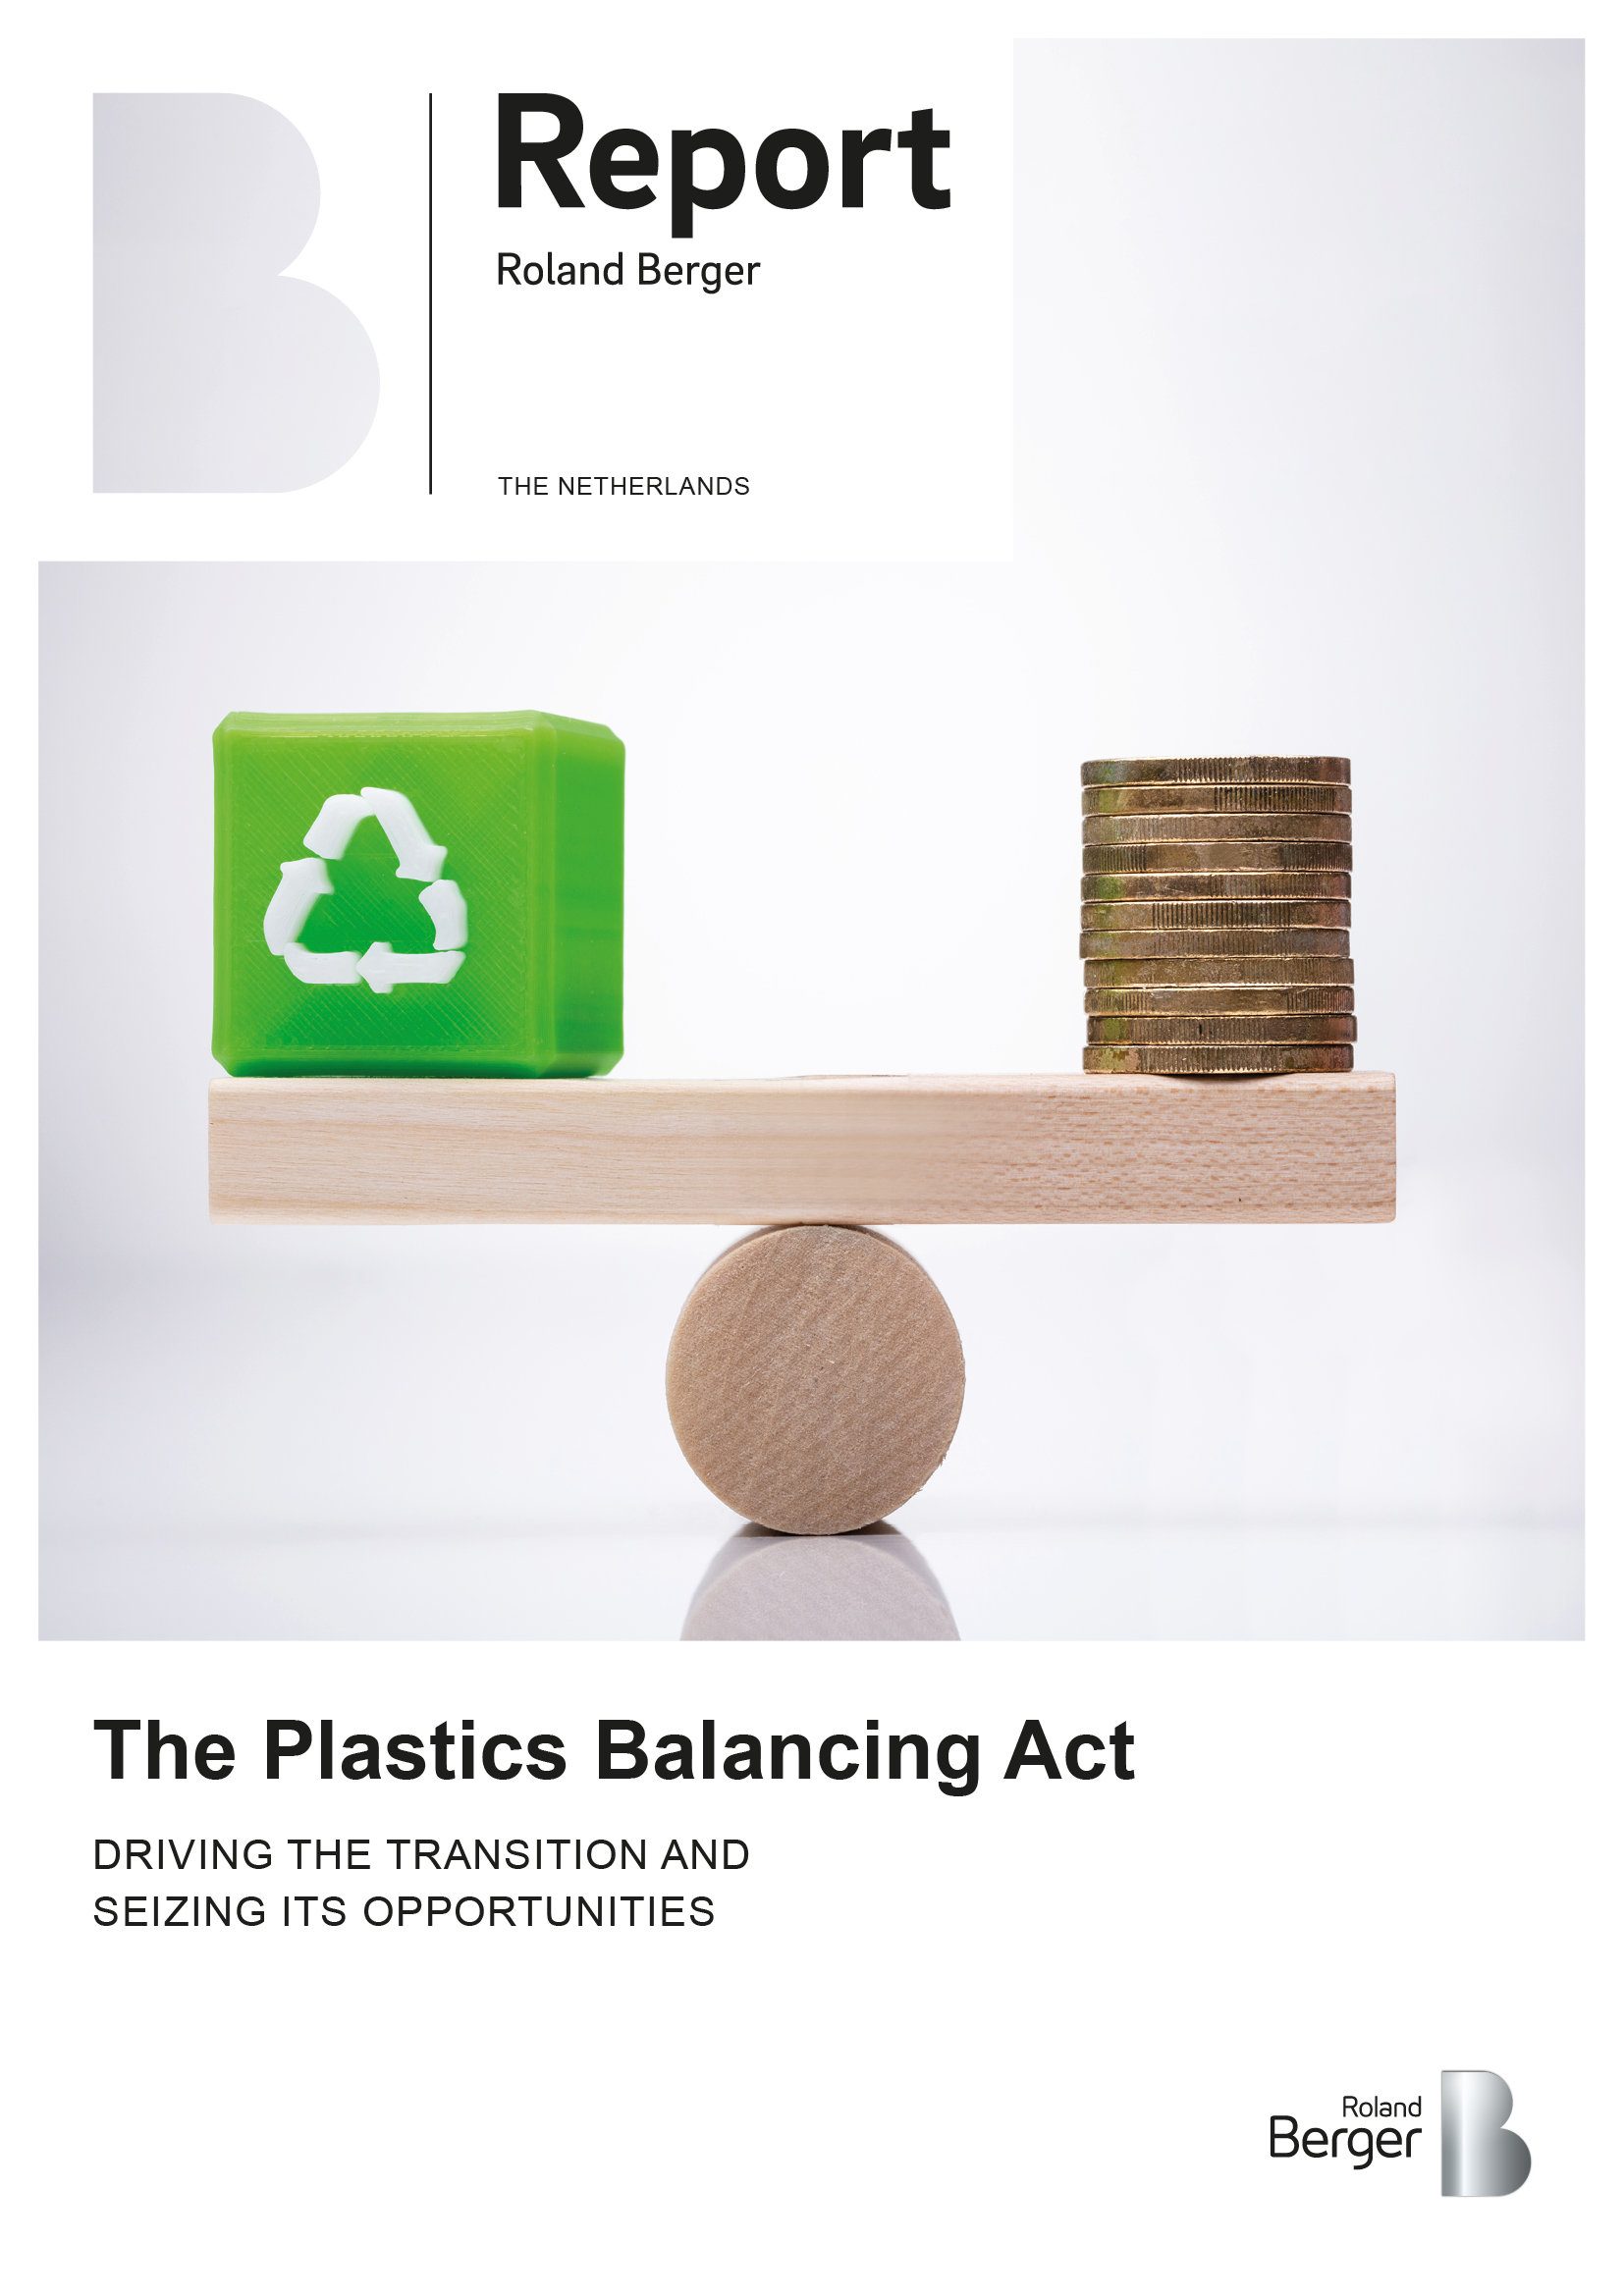 https://www.rolandberger.com/publications/publication_image/Roland-Berger-Report-The-Plastics-Balancing-Act-COVER.jpg